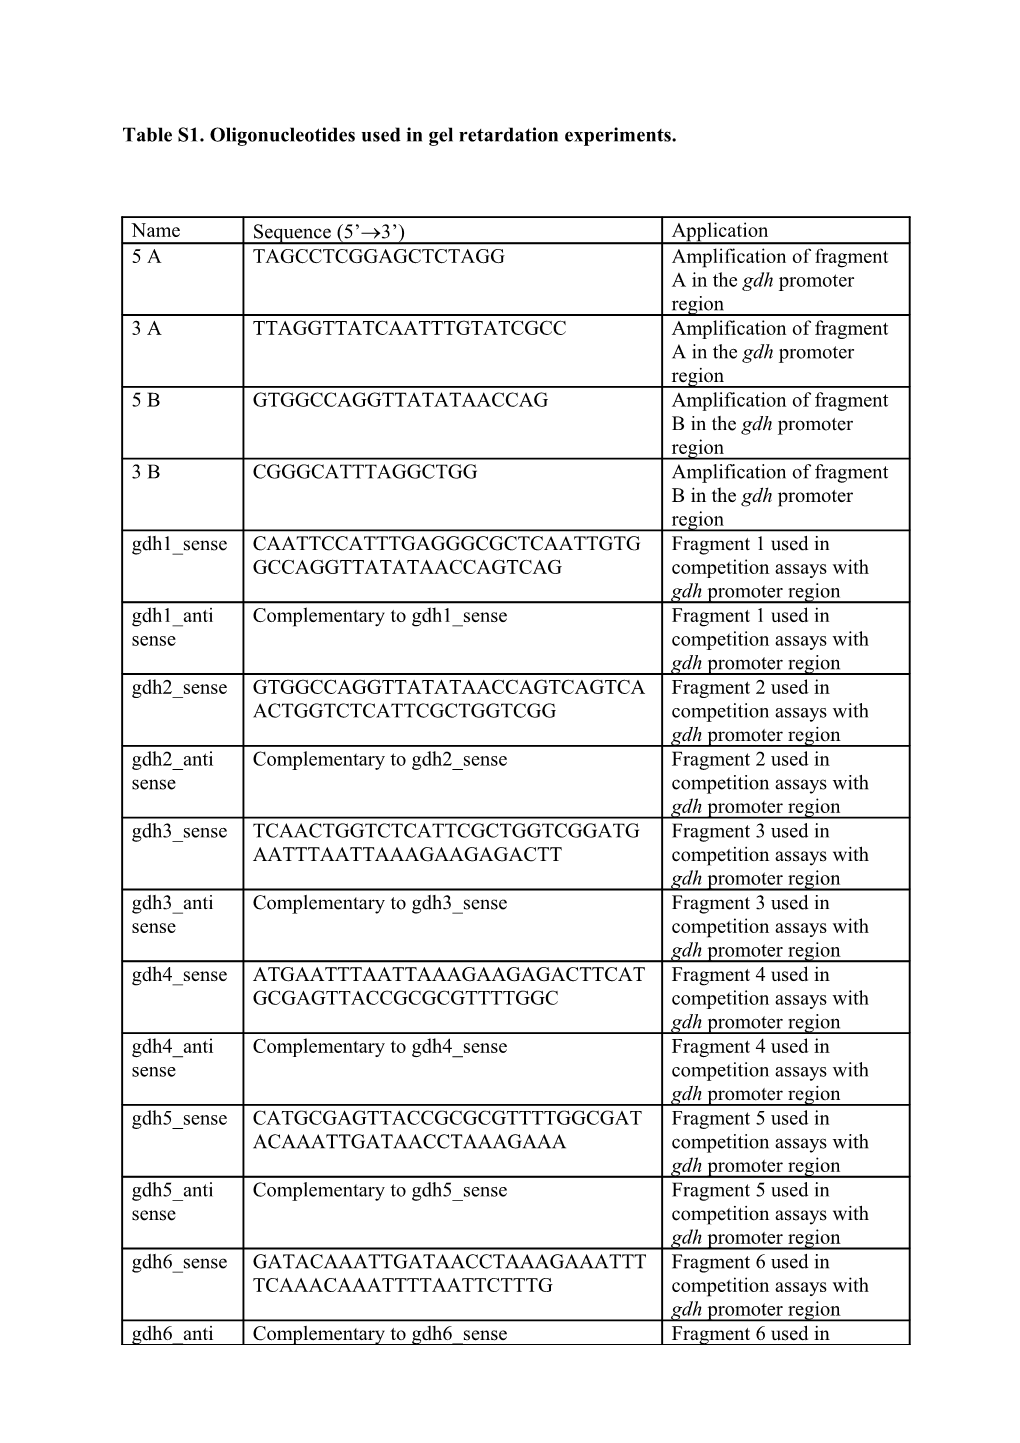 Table S1. Oligonucleotides Used in Gel Retardation Experiments